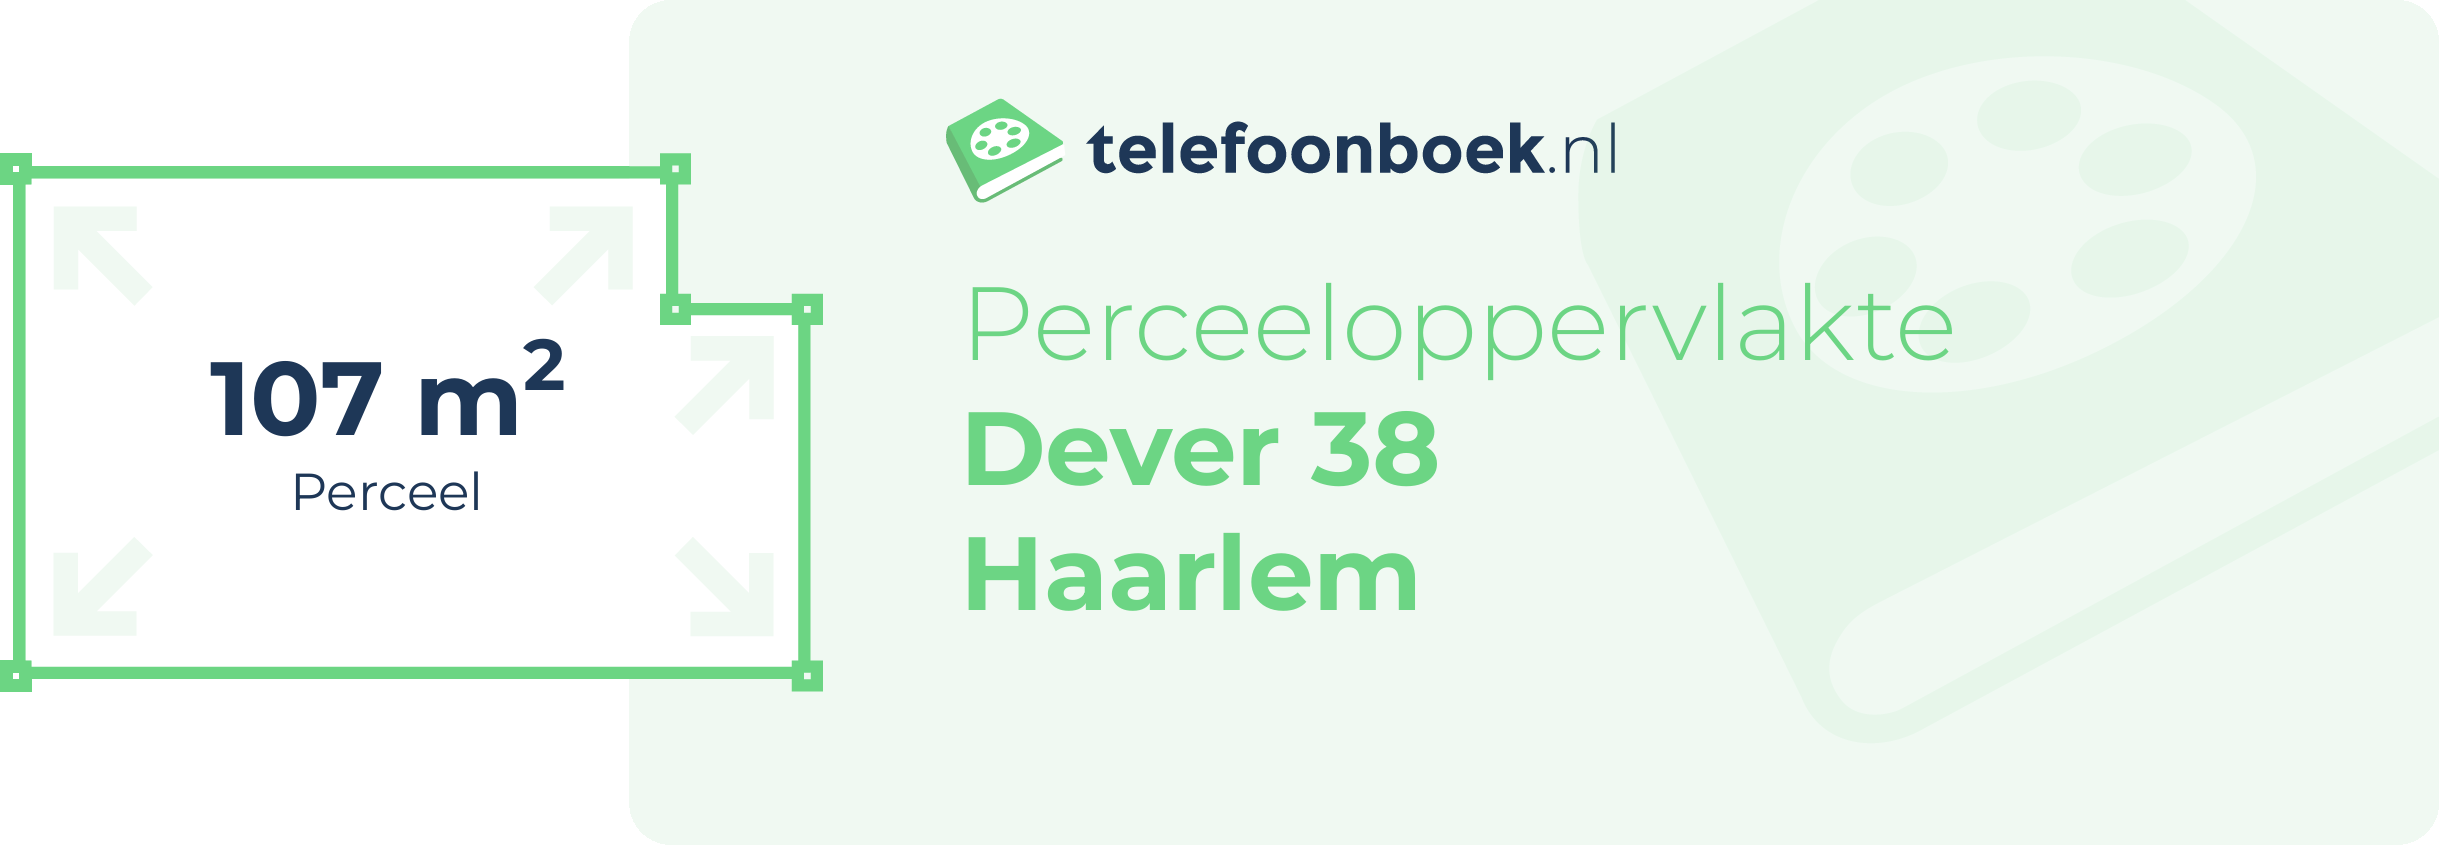 Perceeloppervlakte Dever 38 Haarlem